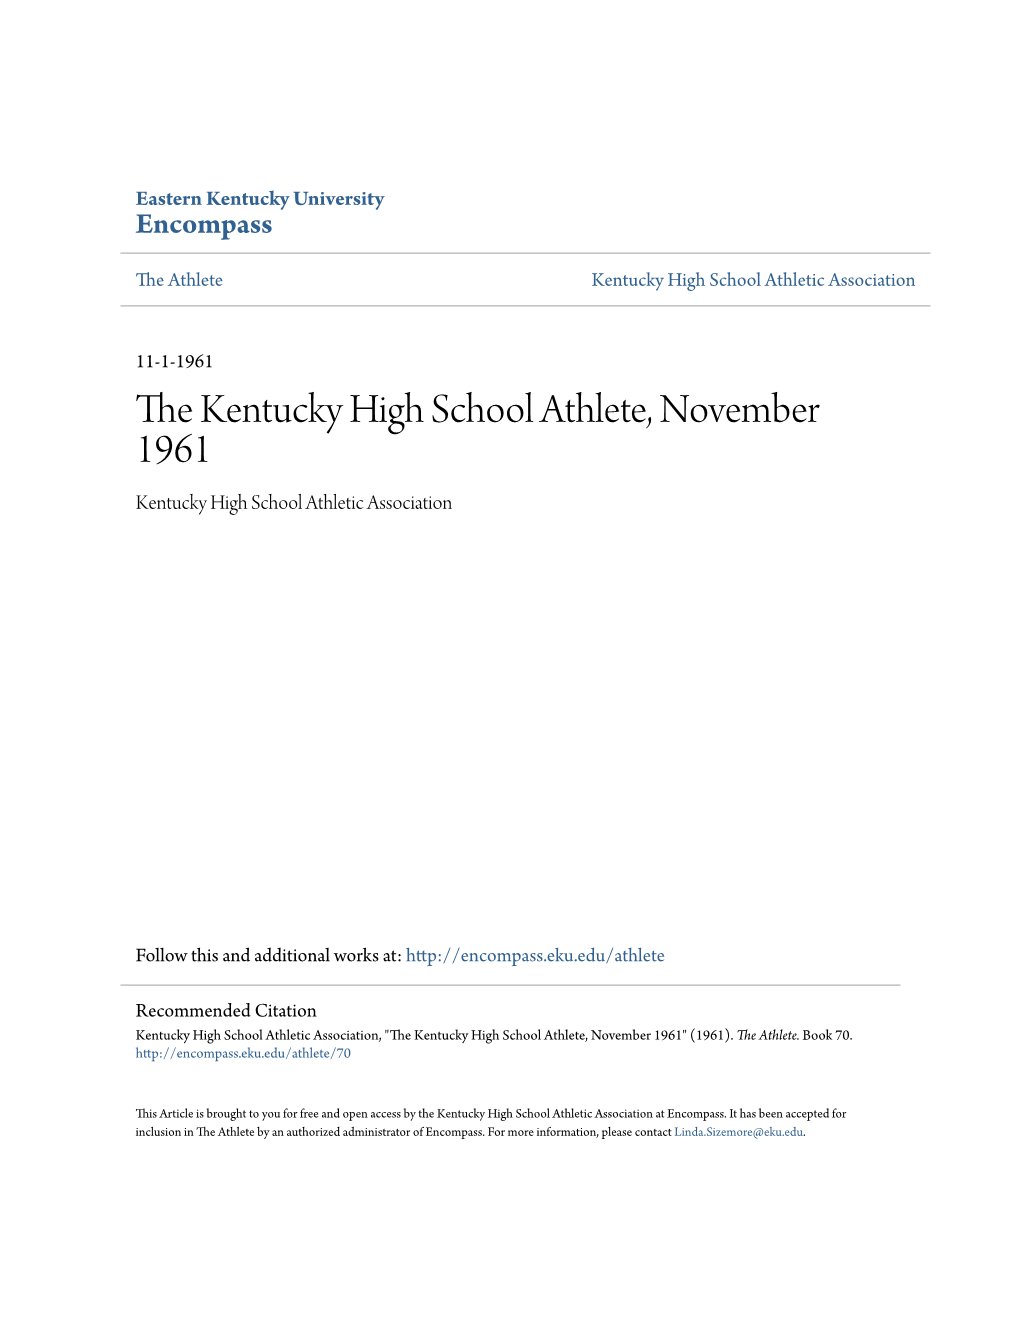 The Kentucky High School Athlete, November 1961 Kentucky High School Athletic Association